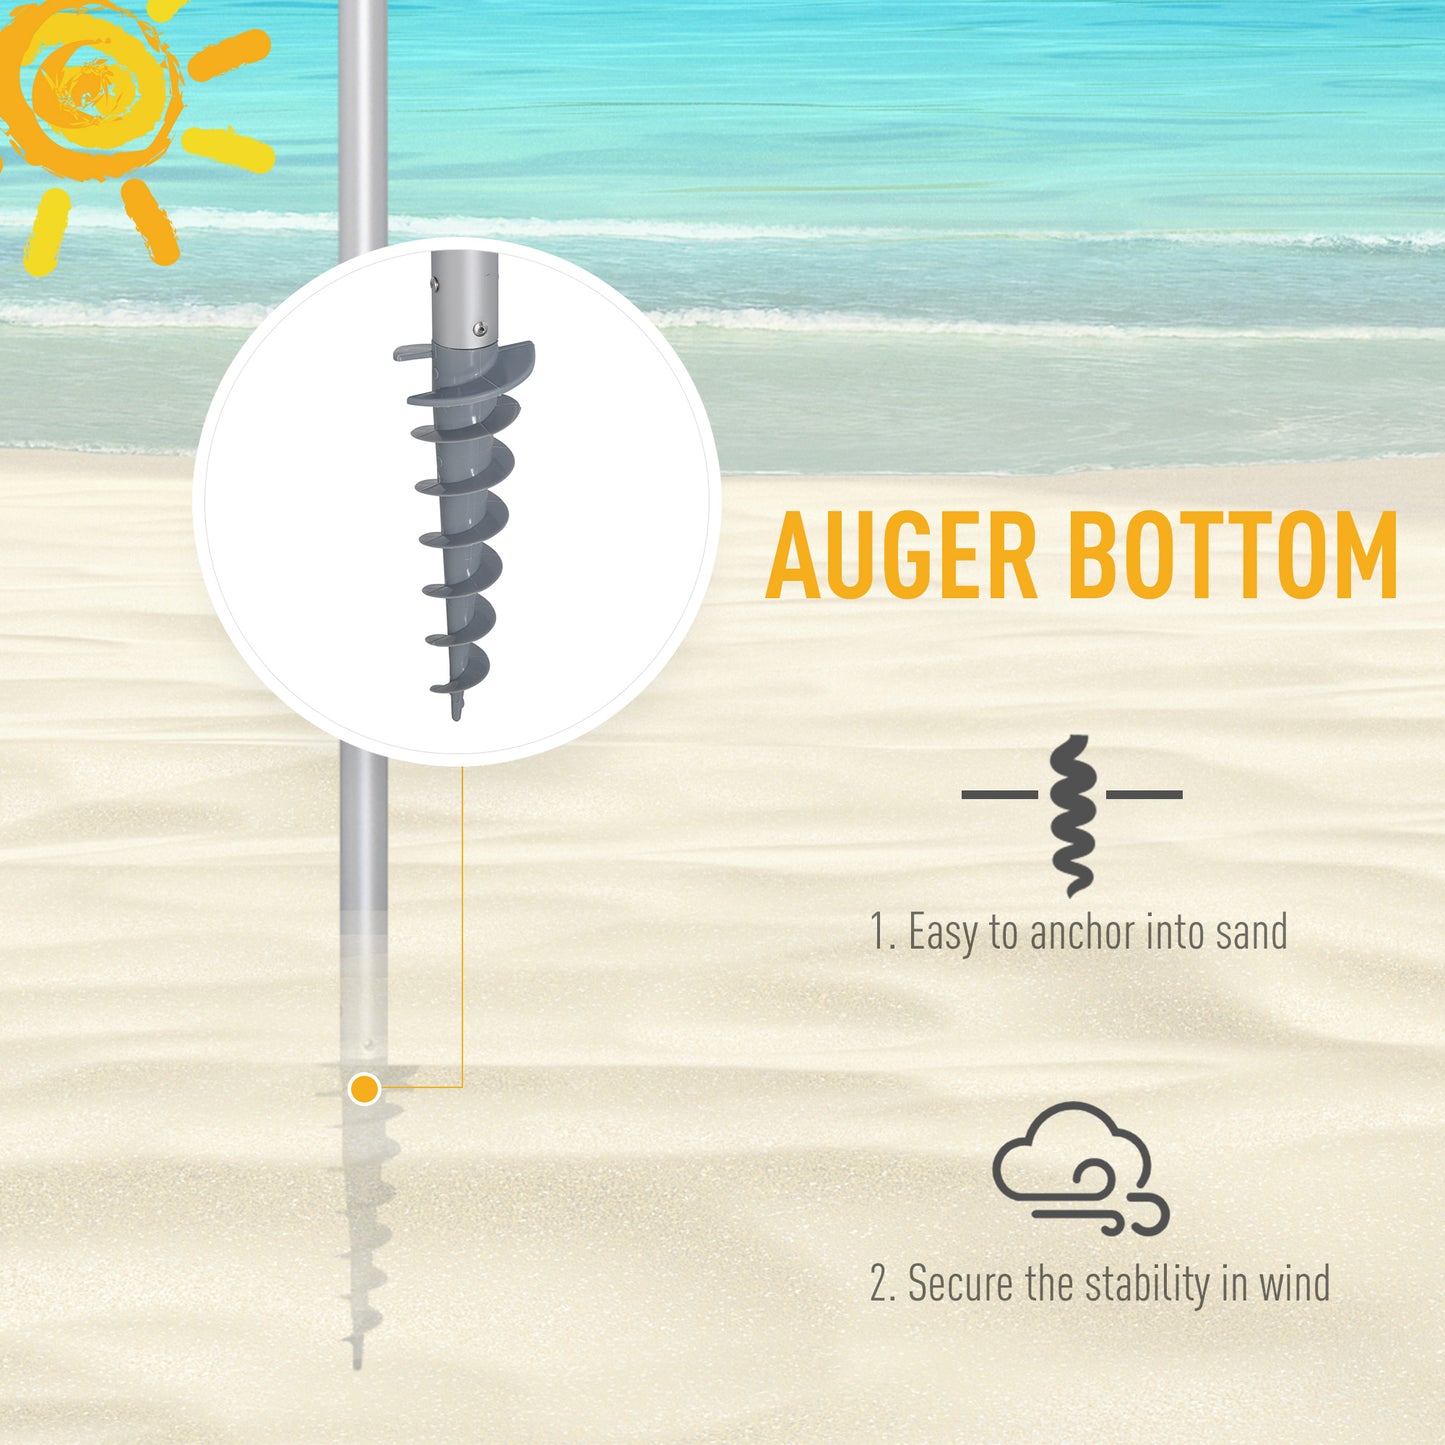 Outsunny Arc Beach Umbrella: 2.4m with Sand Anchor, Tilt Adjustment, Carry Bag - Multicolour